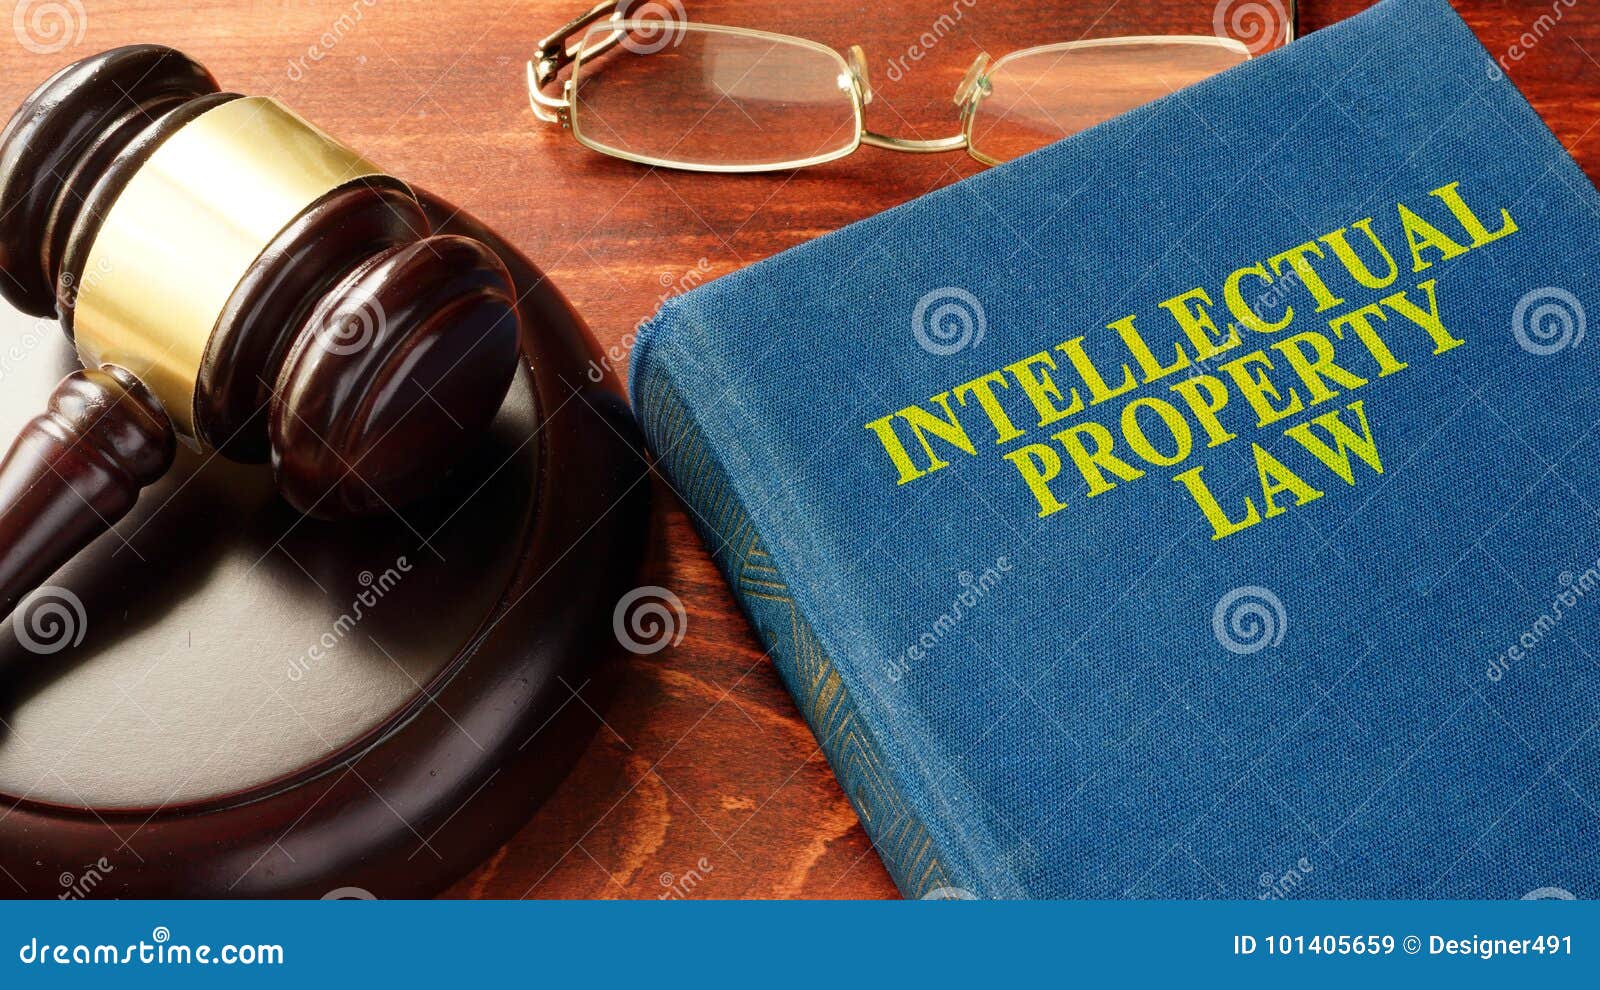 intellectual property law.